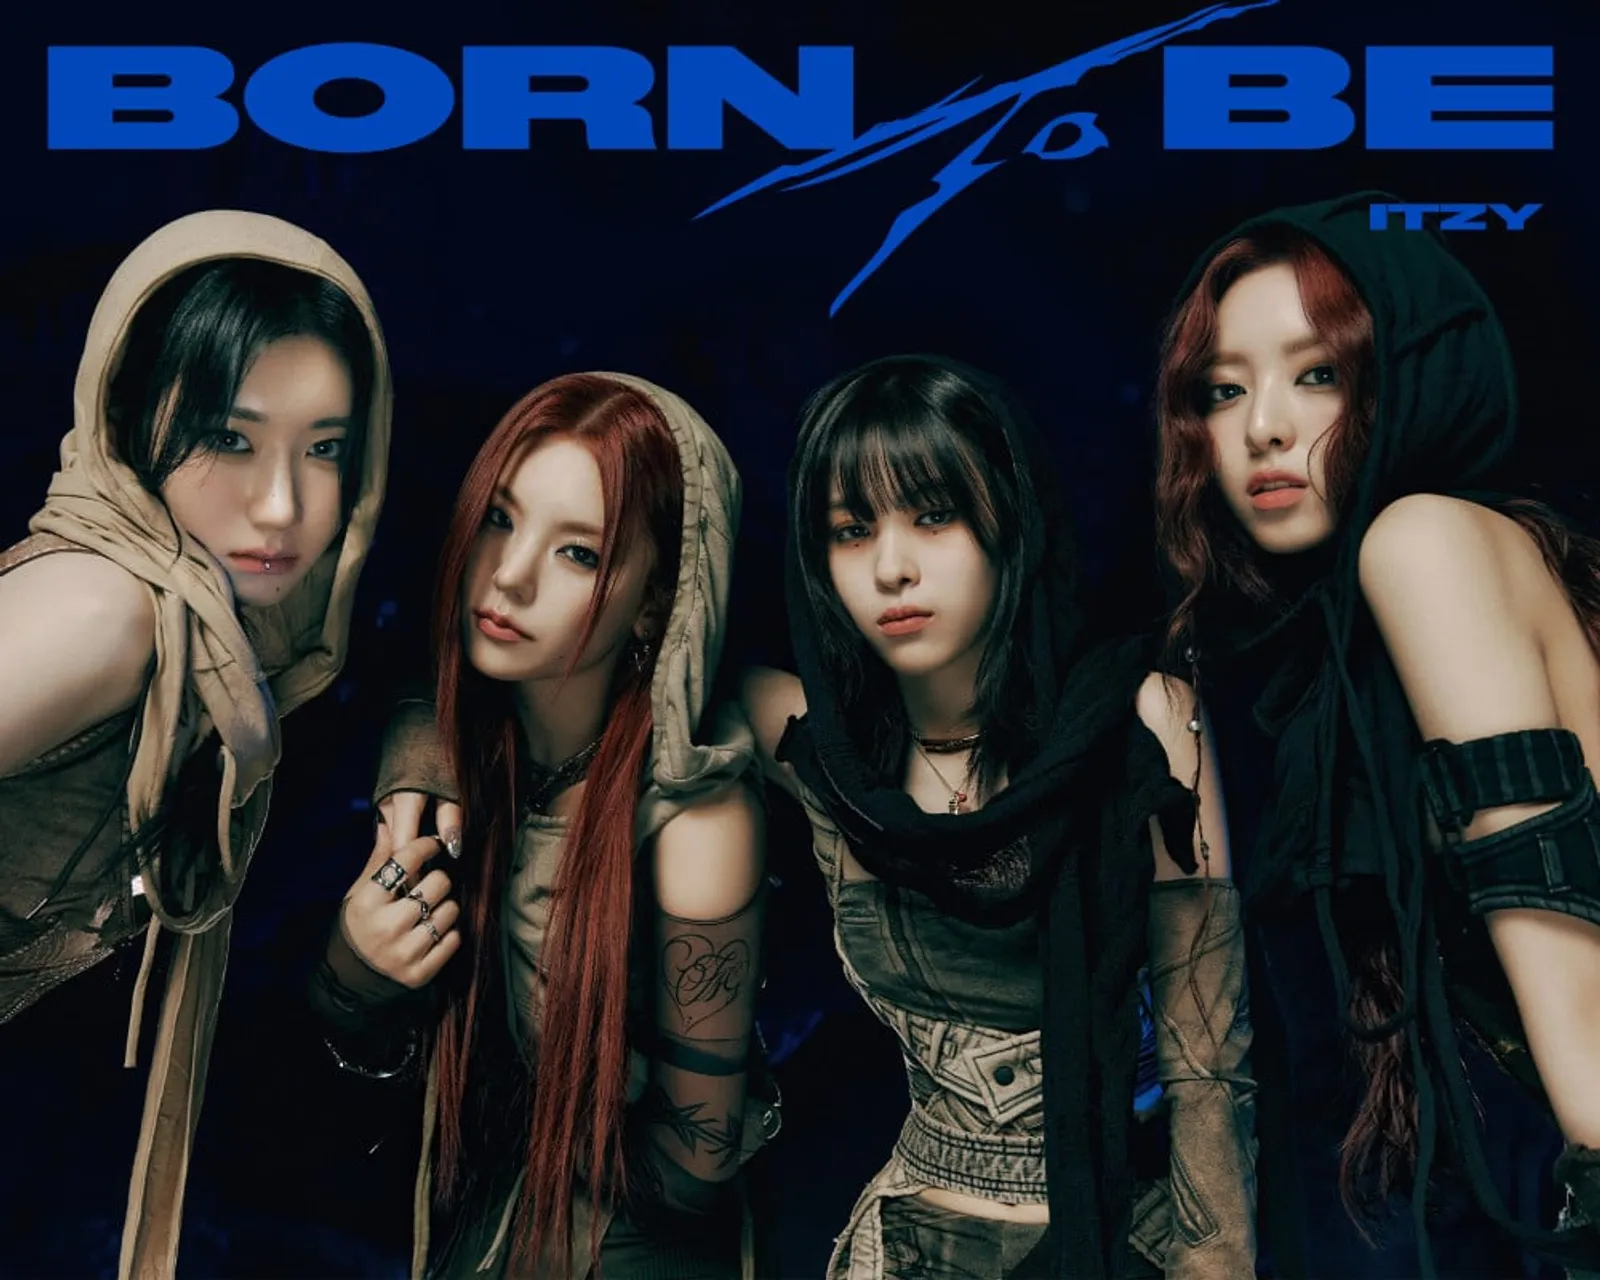 Lirik Lagu ITZY 'Born to Be' dan Terjemahannya, Apa Maknanya?